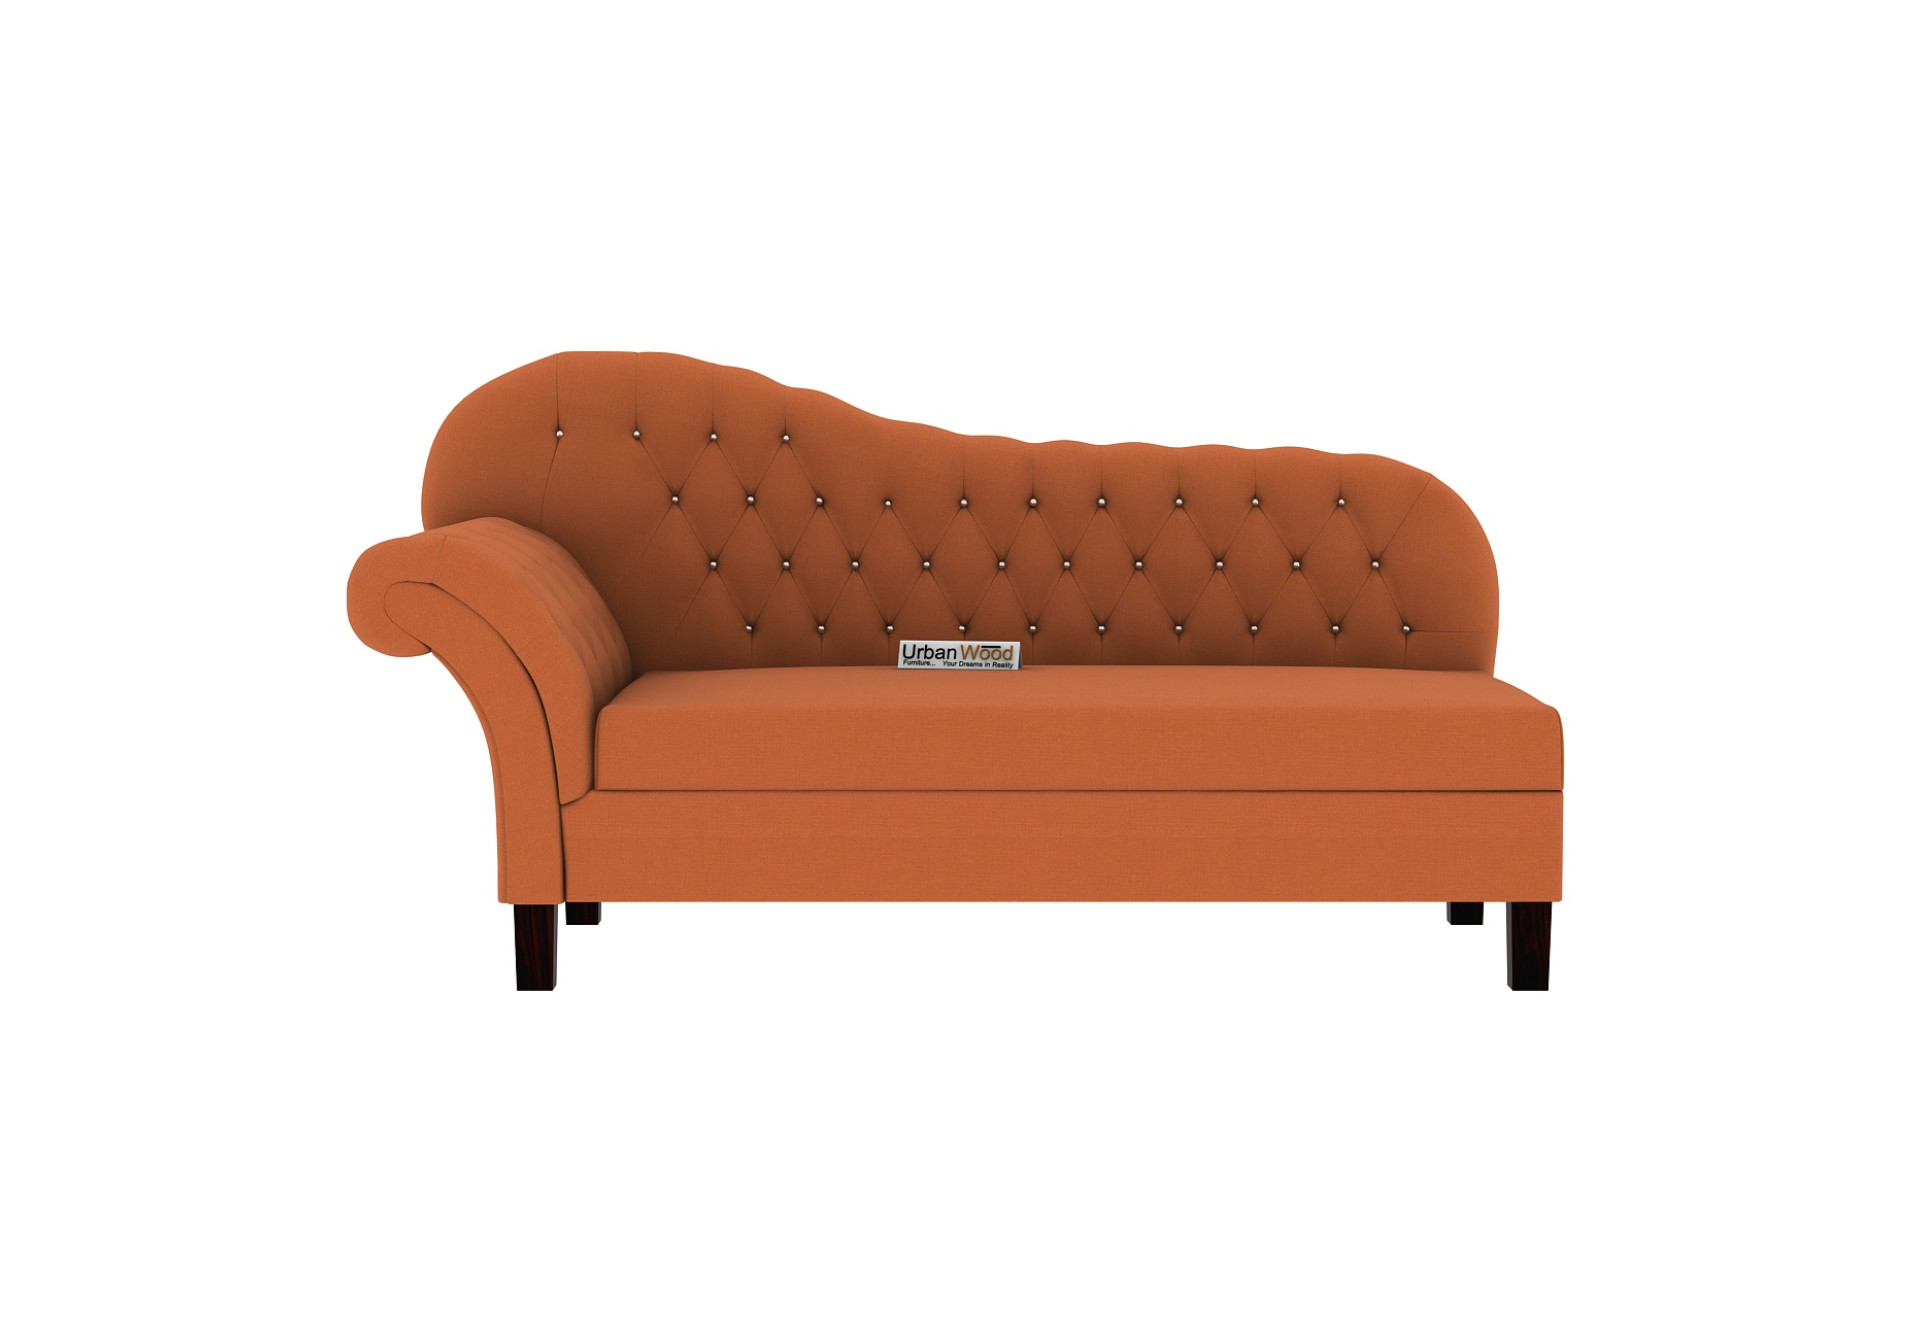 Rosado Chaise Lounge (Cotton, Diana Orange)